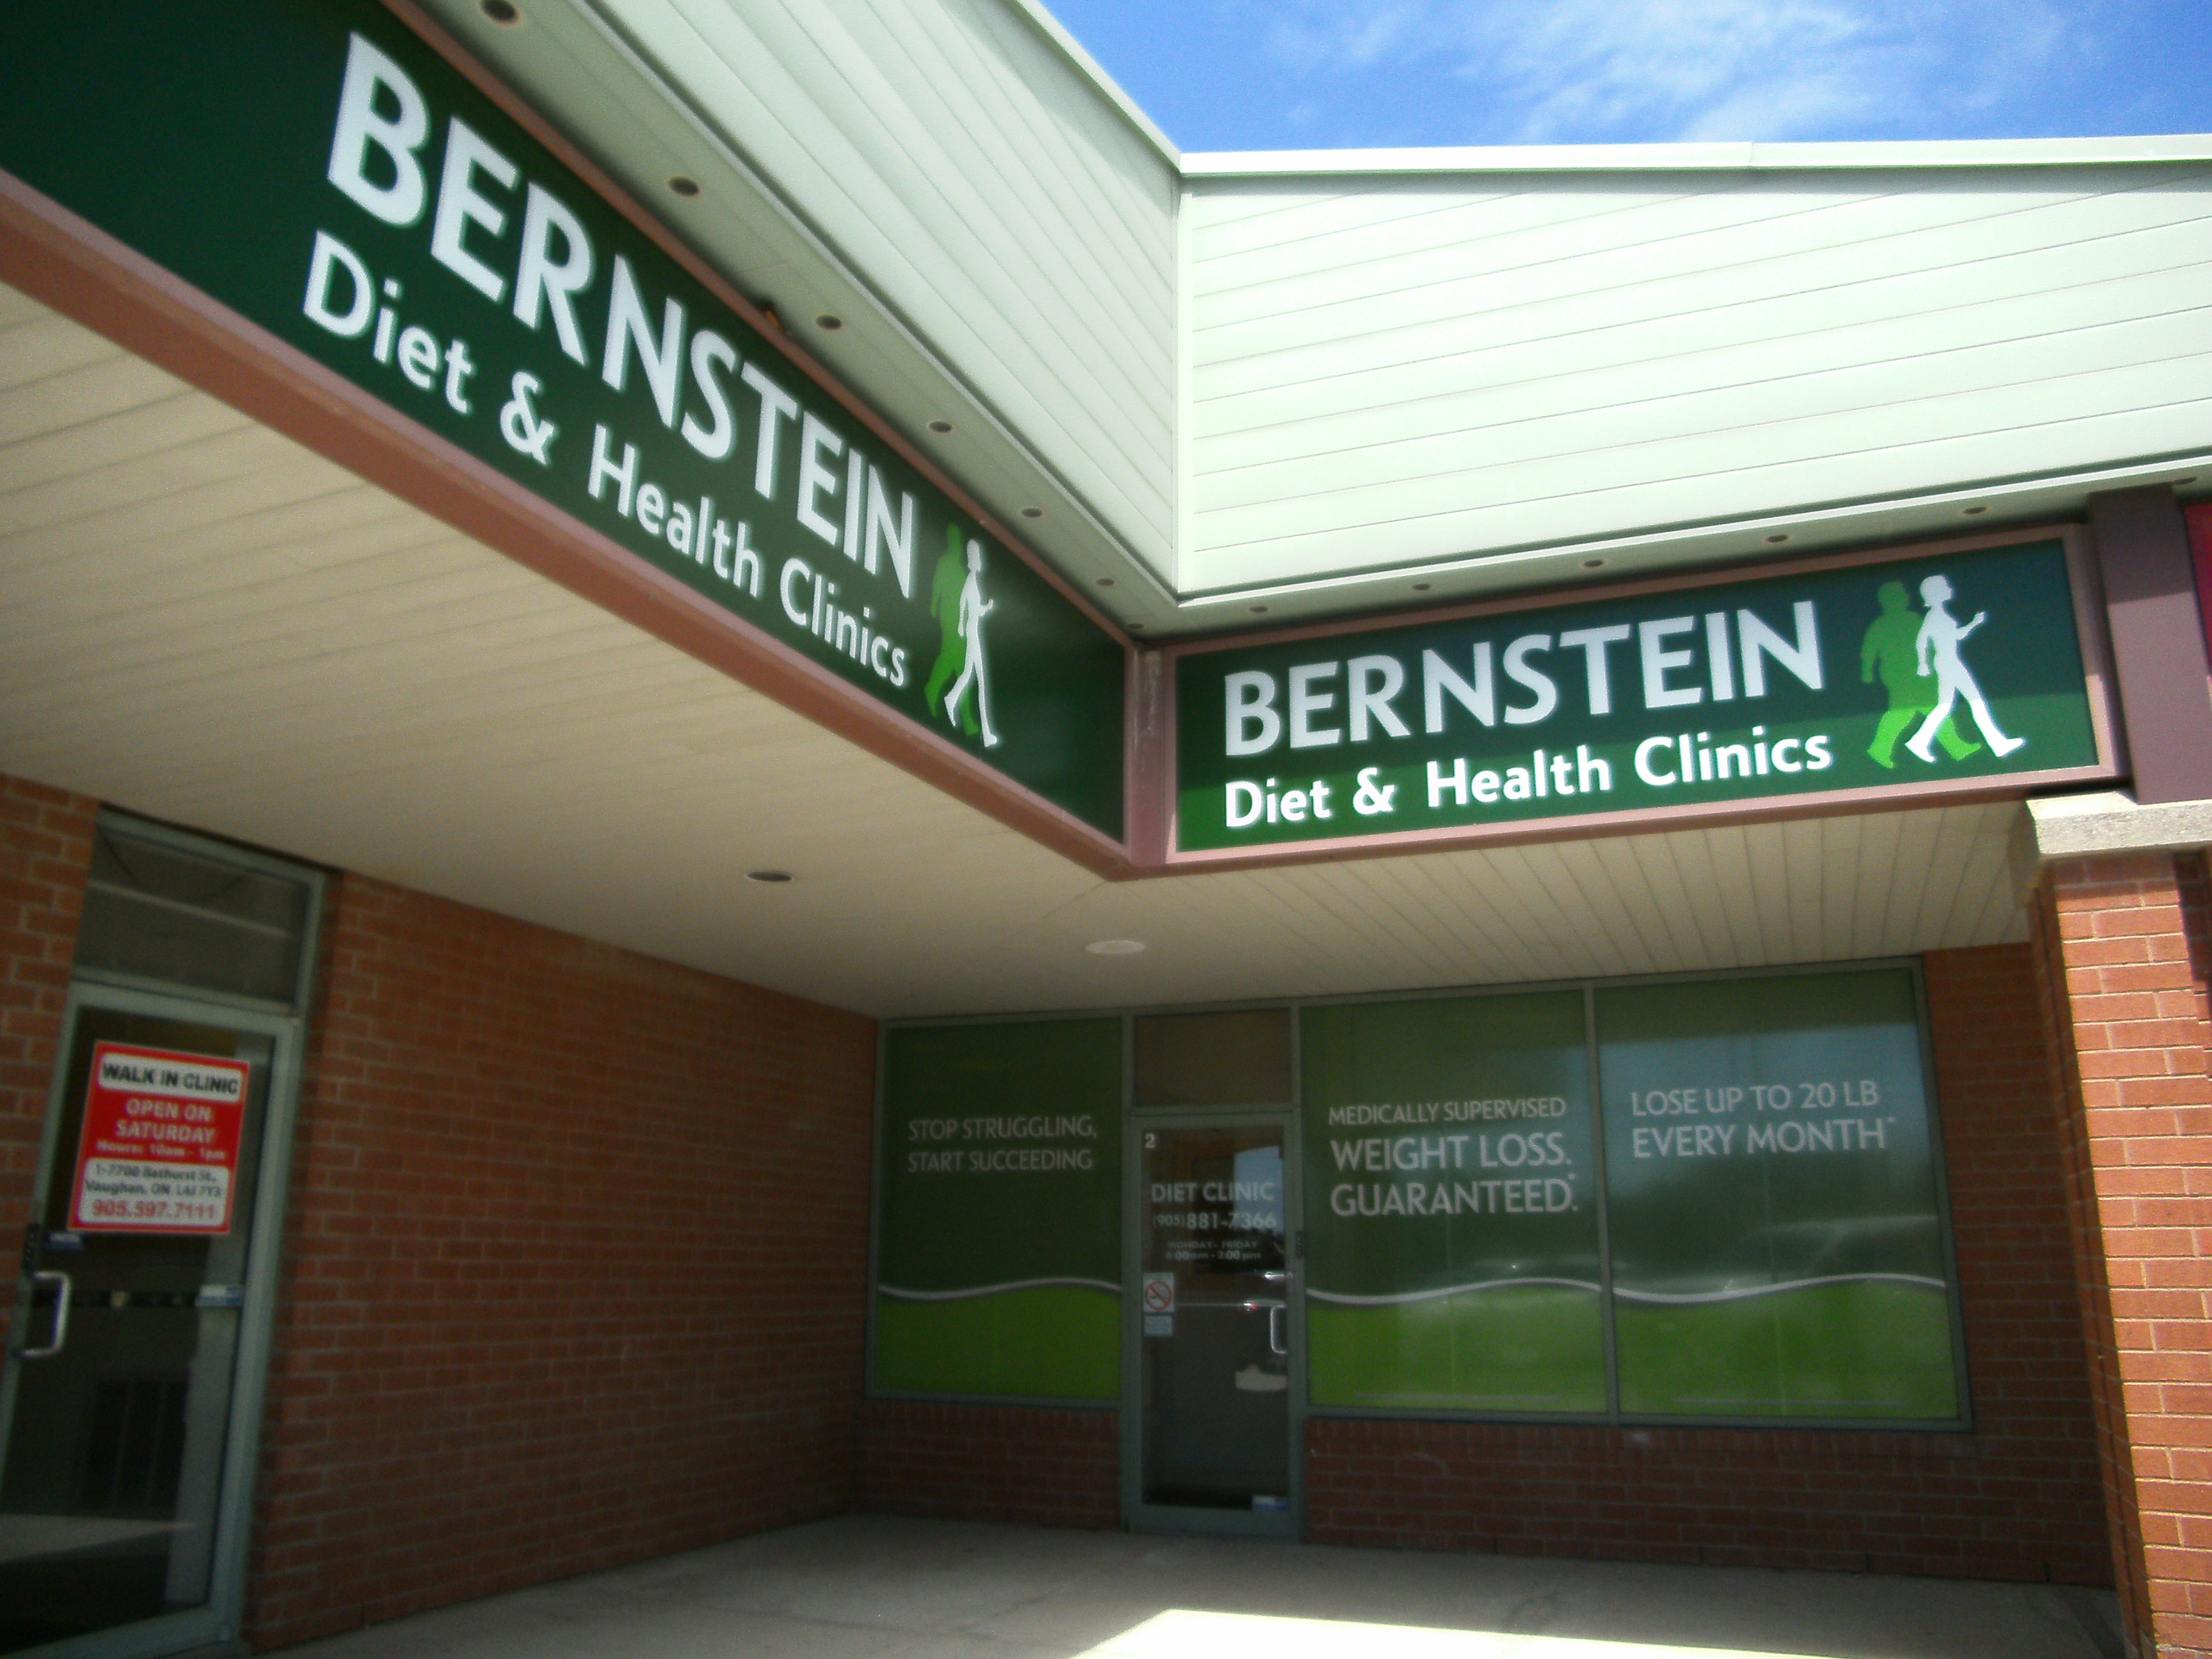 Dr. Bernstein Weight Loss & Diet Clinic, Thornhill - Vaughan, Ontario